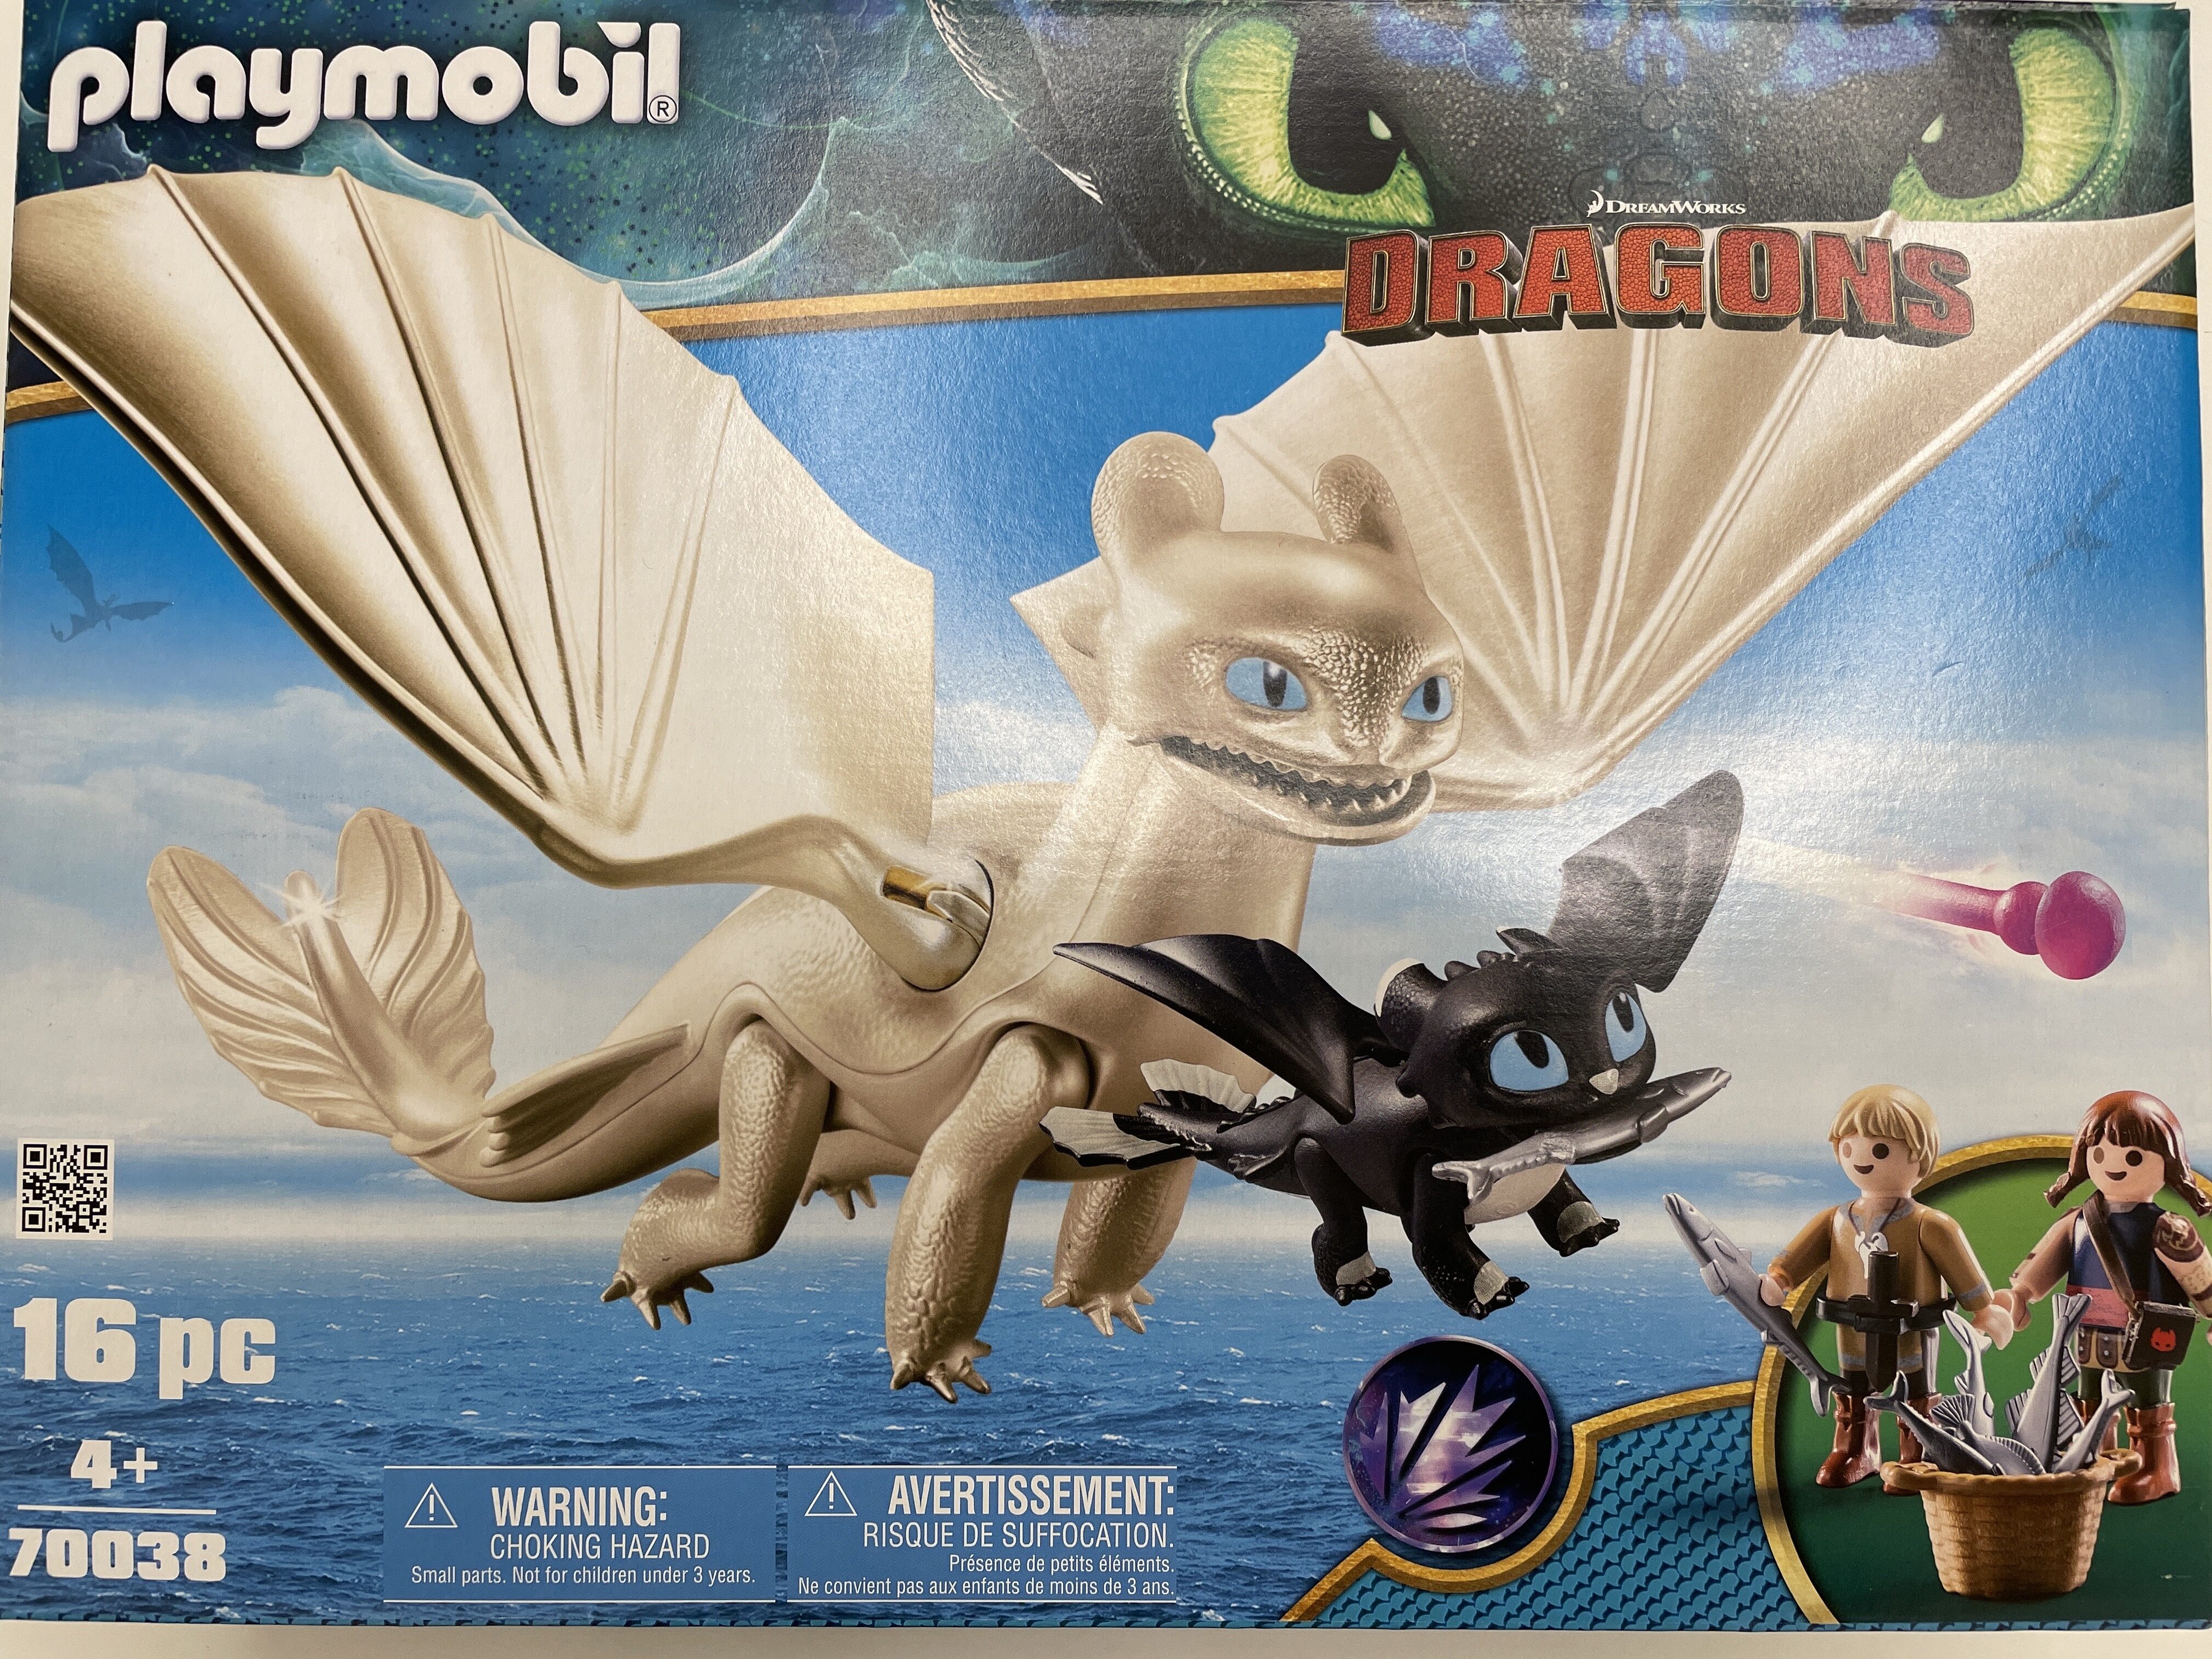 Playmobil Dragons 70038 - Product - de